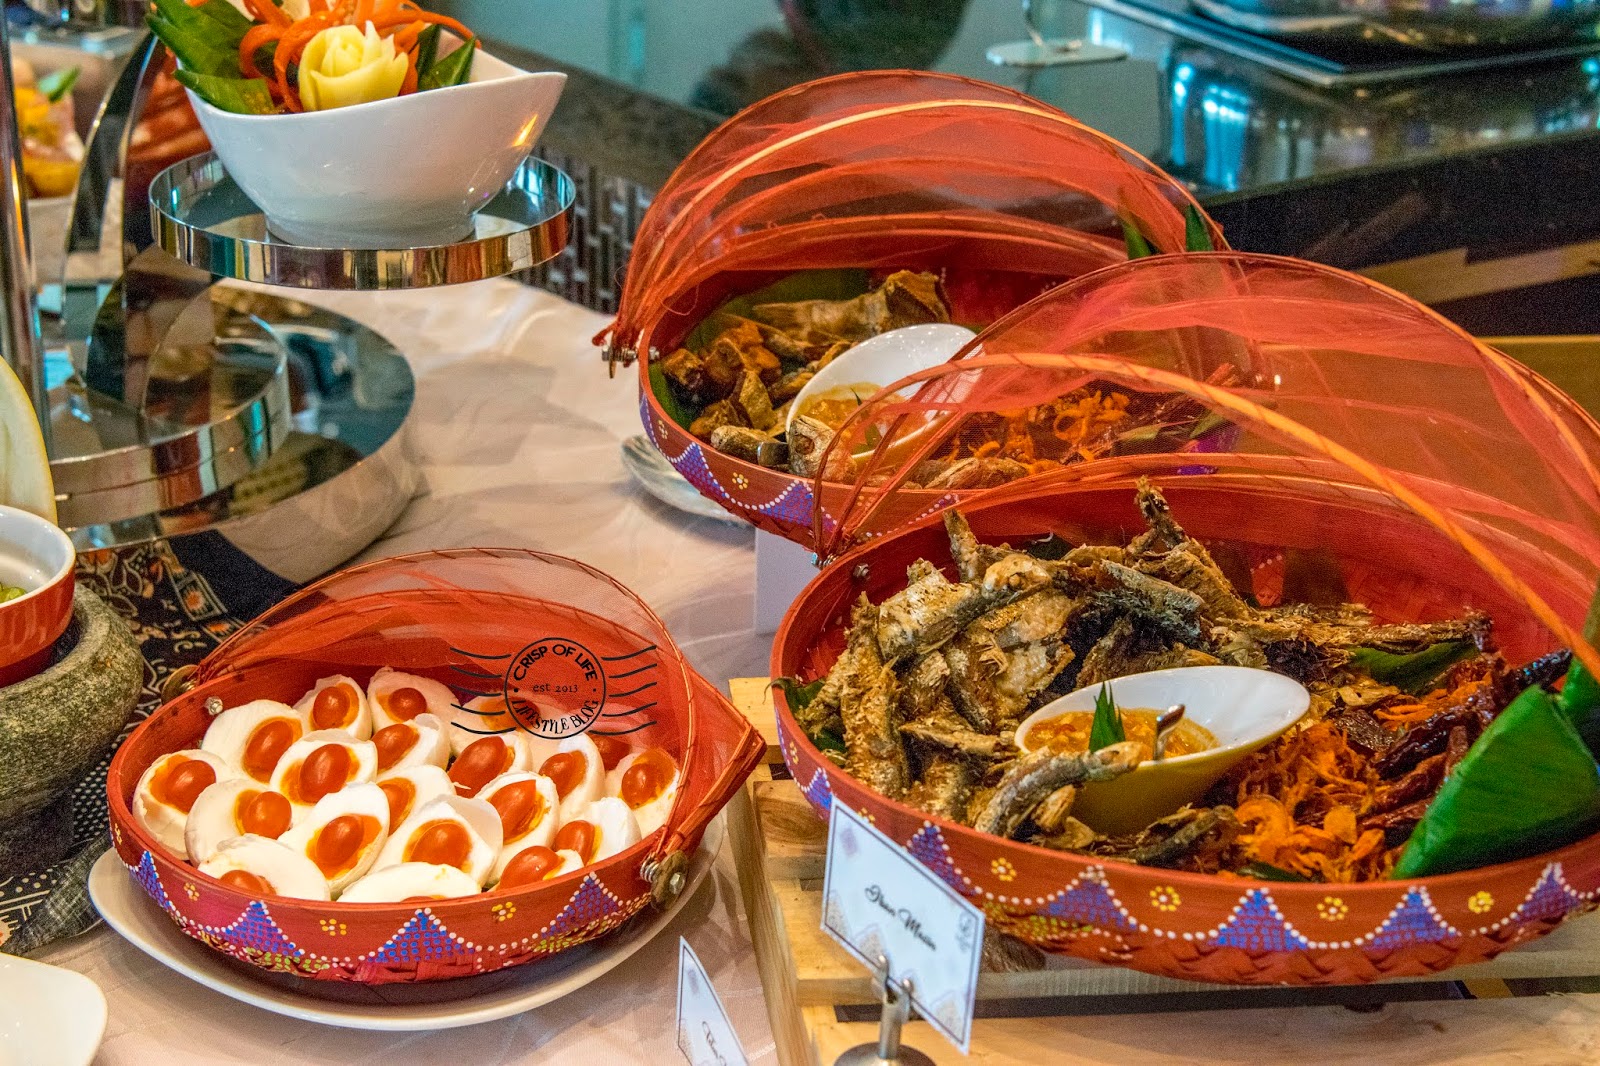 "Khazanah Sajian Nusantara" Ramadan Buffet Dinner with Minang Dishes @ The Light Hotel, Penang